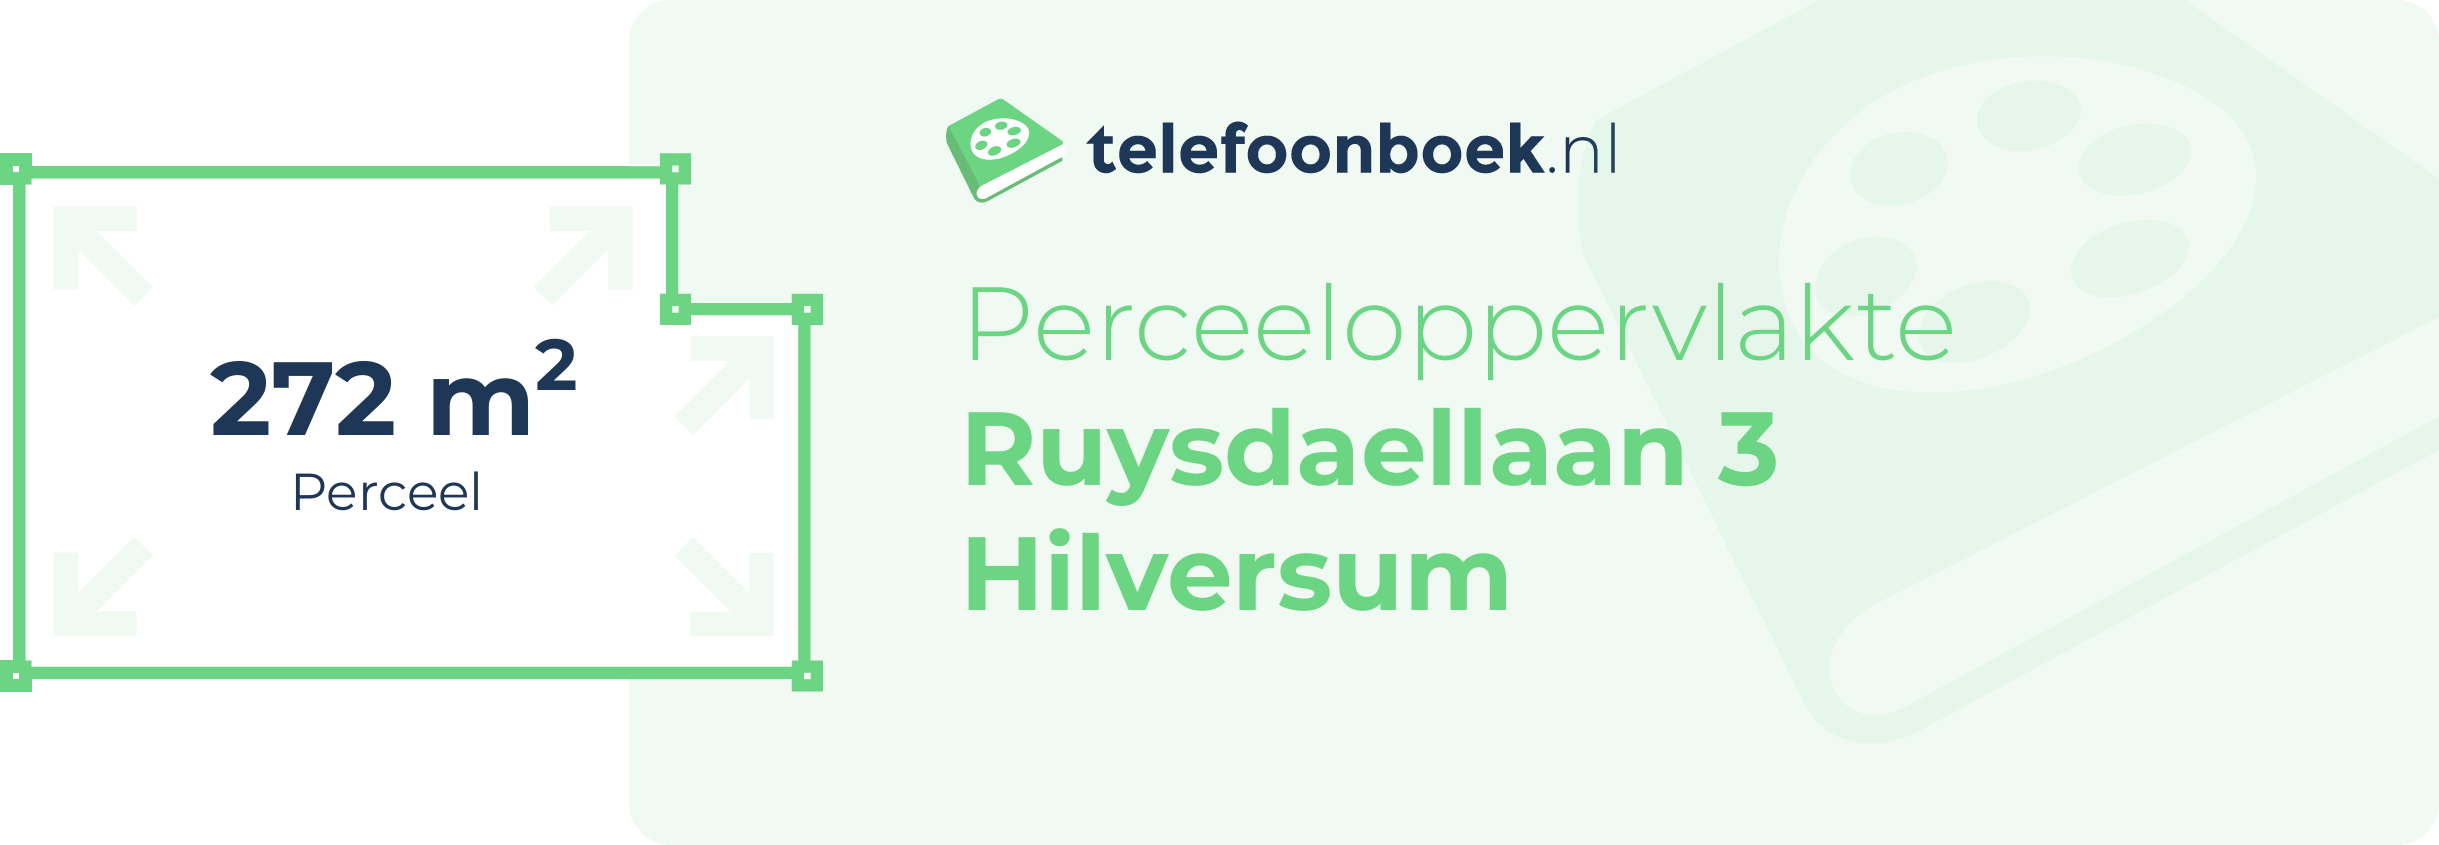 Perceeloppervlakte Ruysdaellaan 3 Hilversum